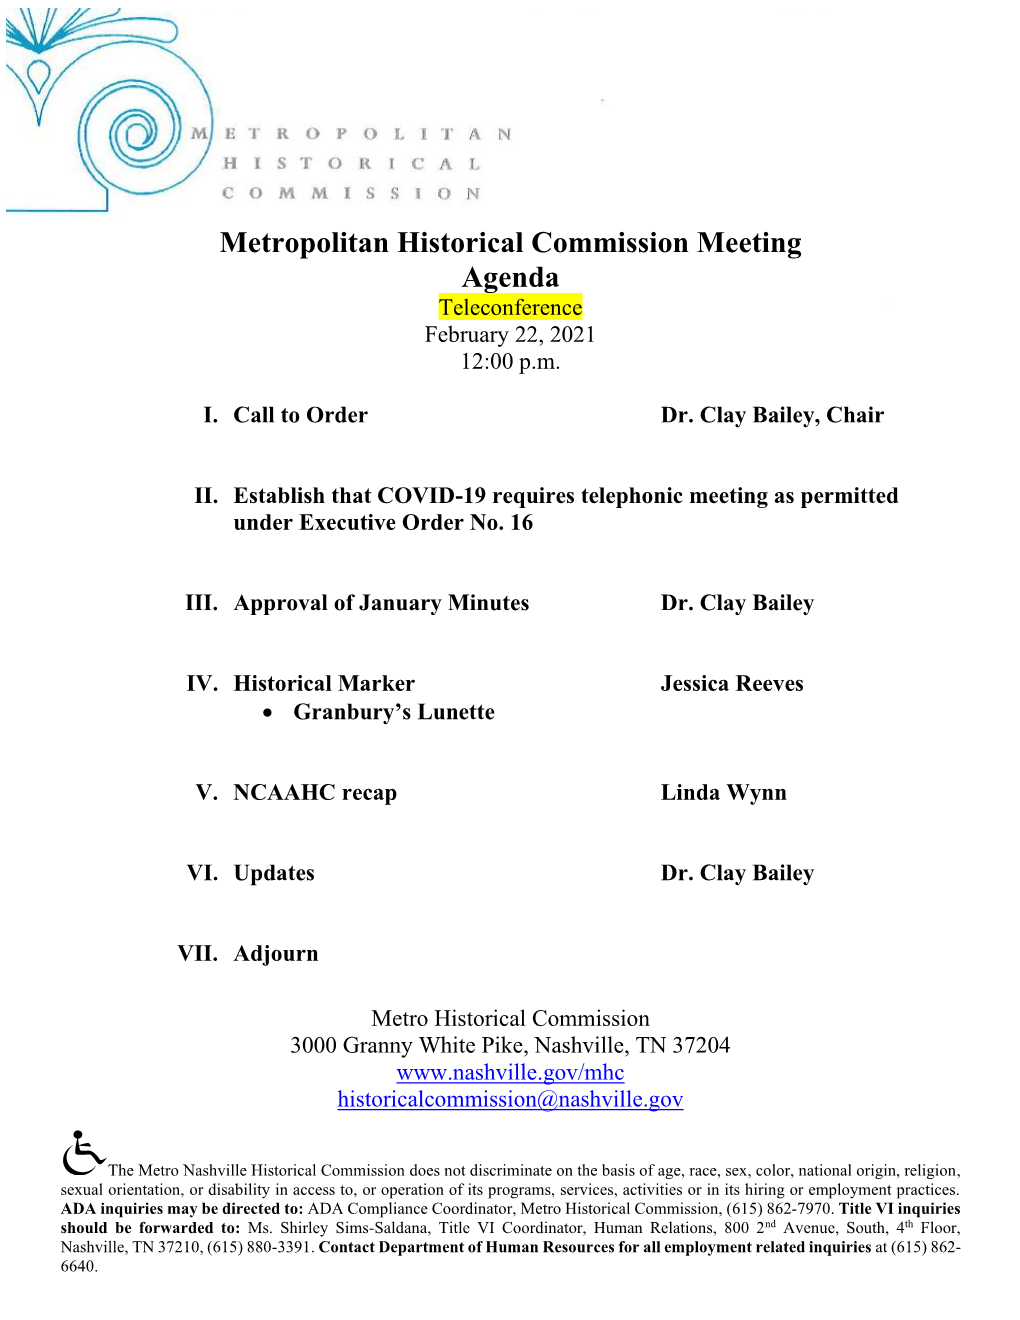 Metropolitan Historical Commission Meeting Agenda Teleconference February 22, 2021 12:00 P.M